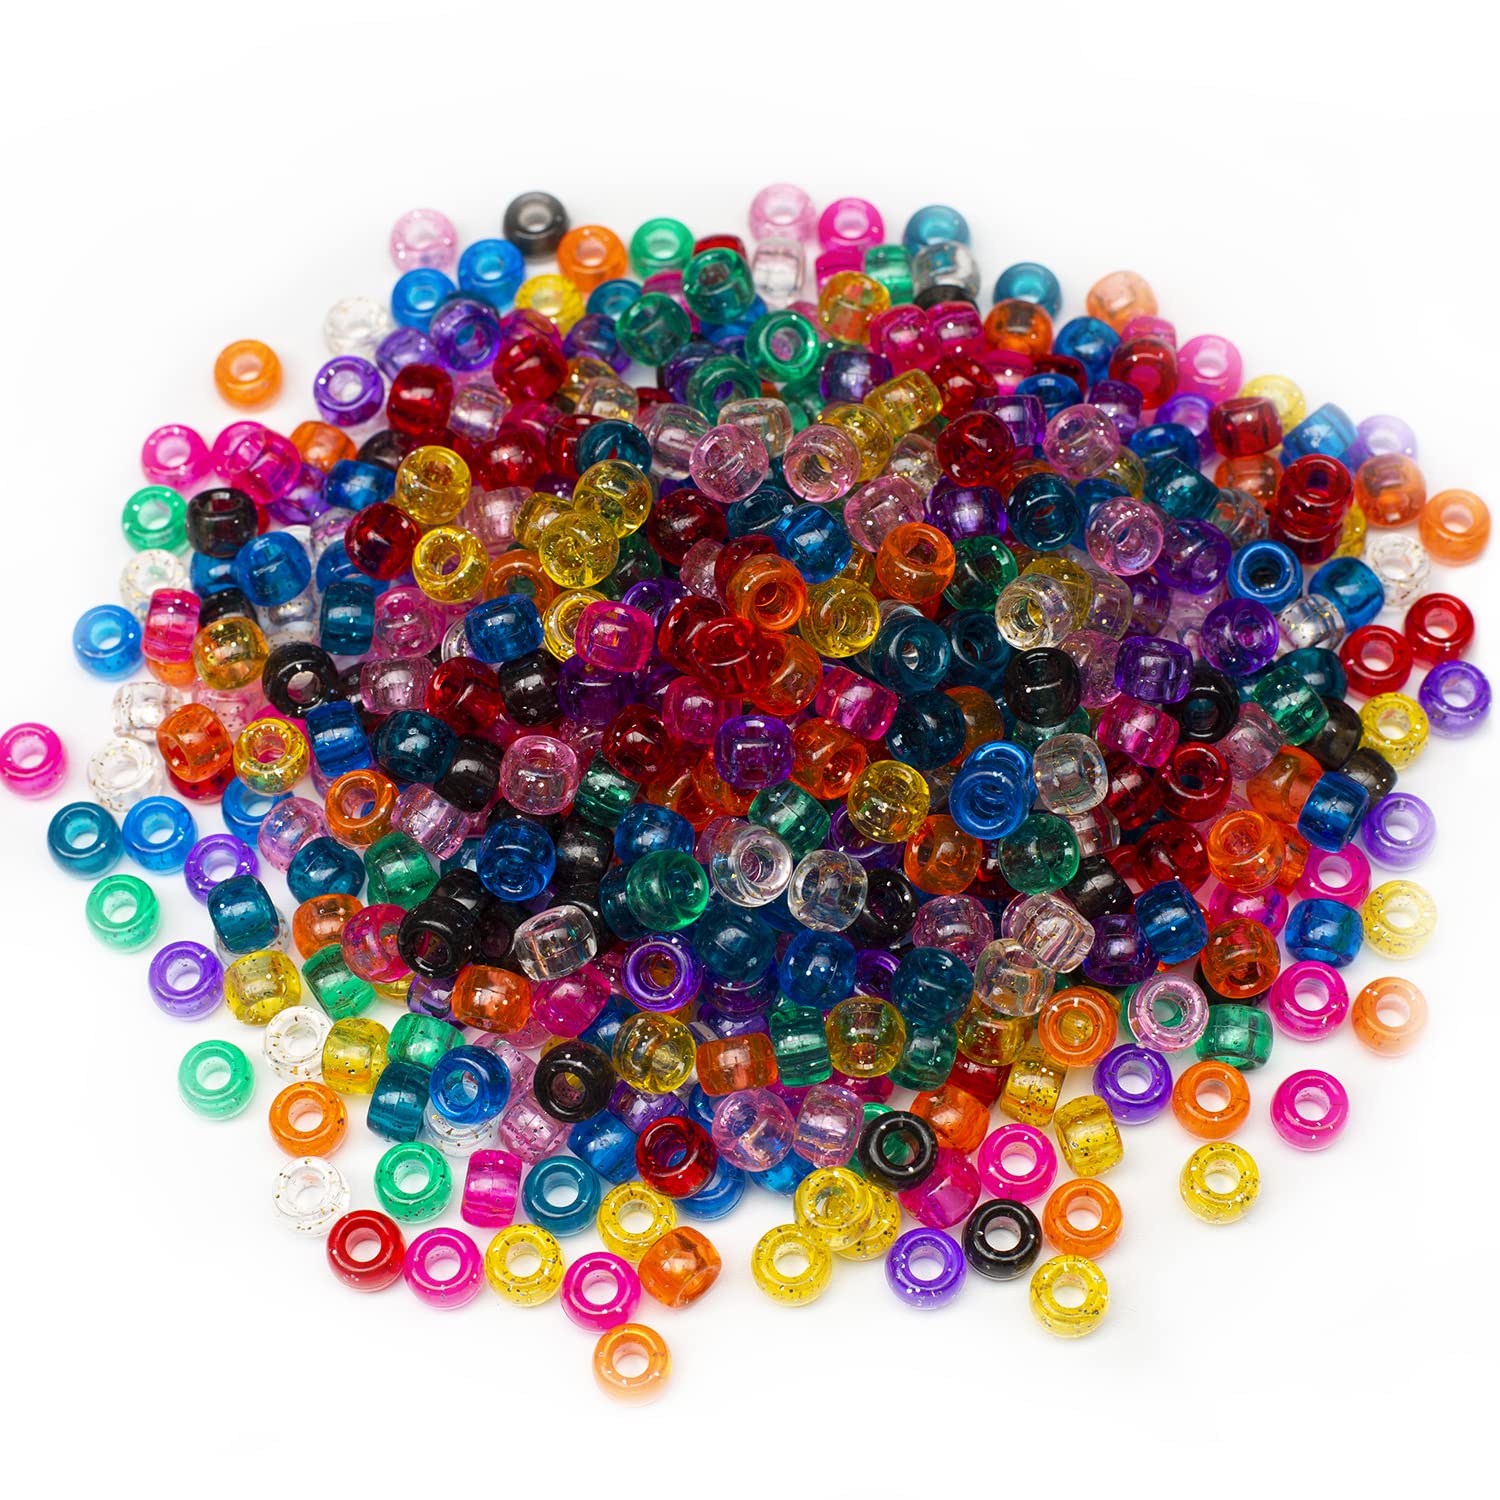 9mm Assorted Glow-in-The-Dark Plastic Pony Beads, 1000pcs - 19B0GD